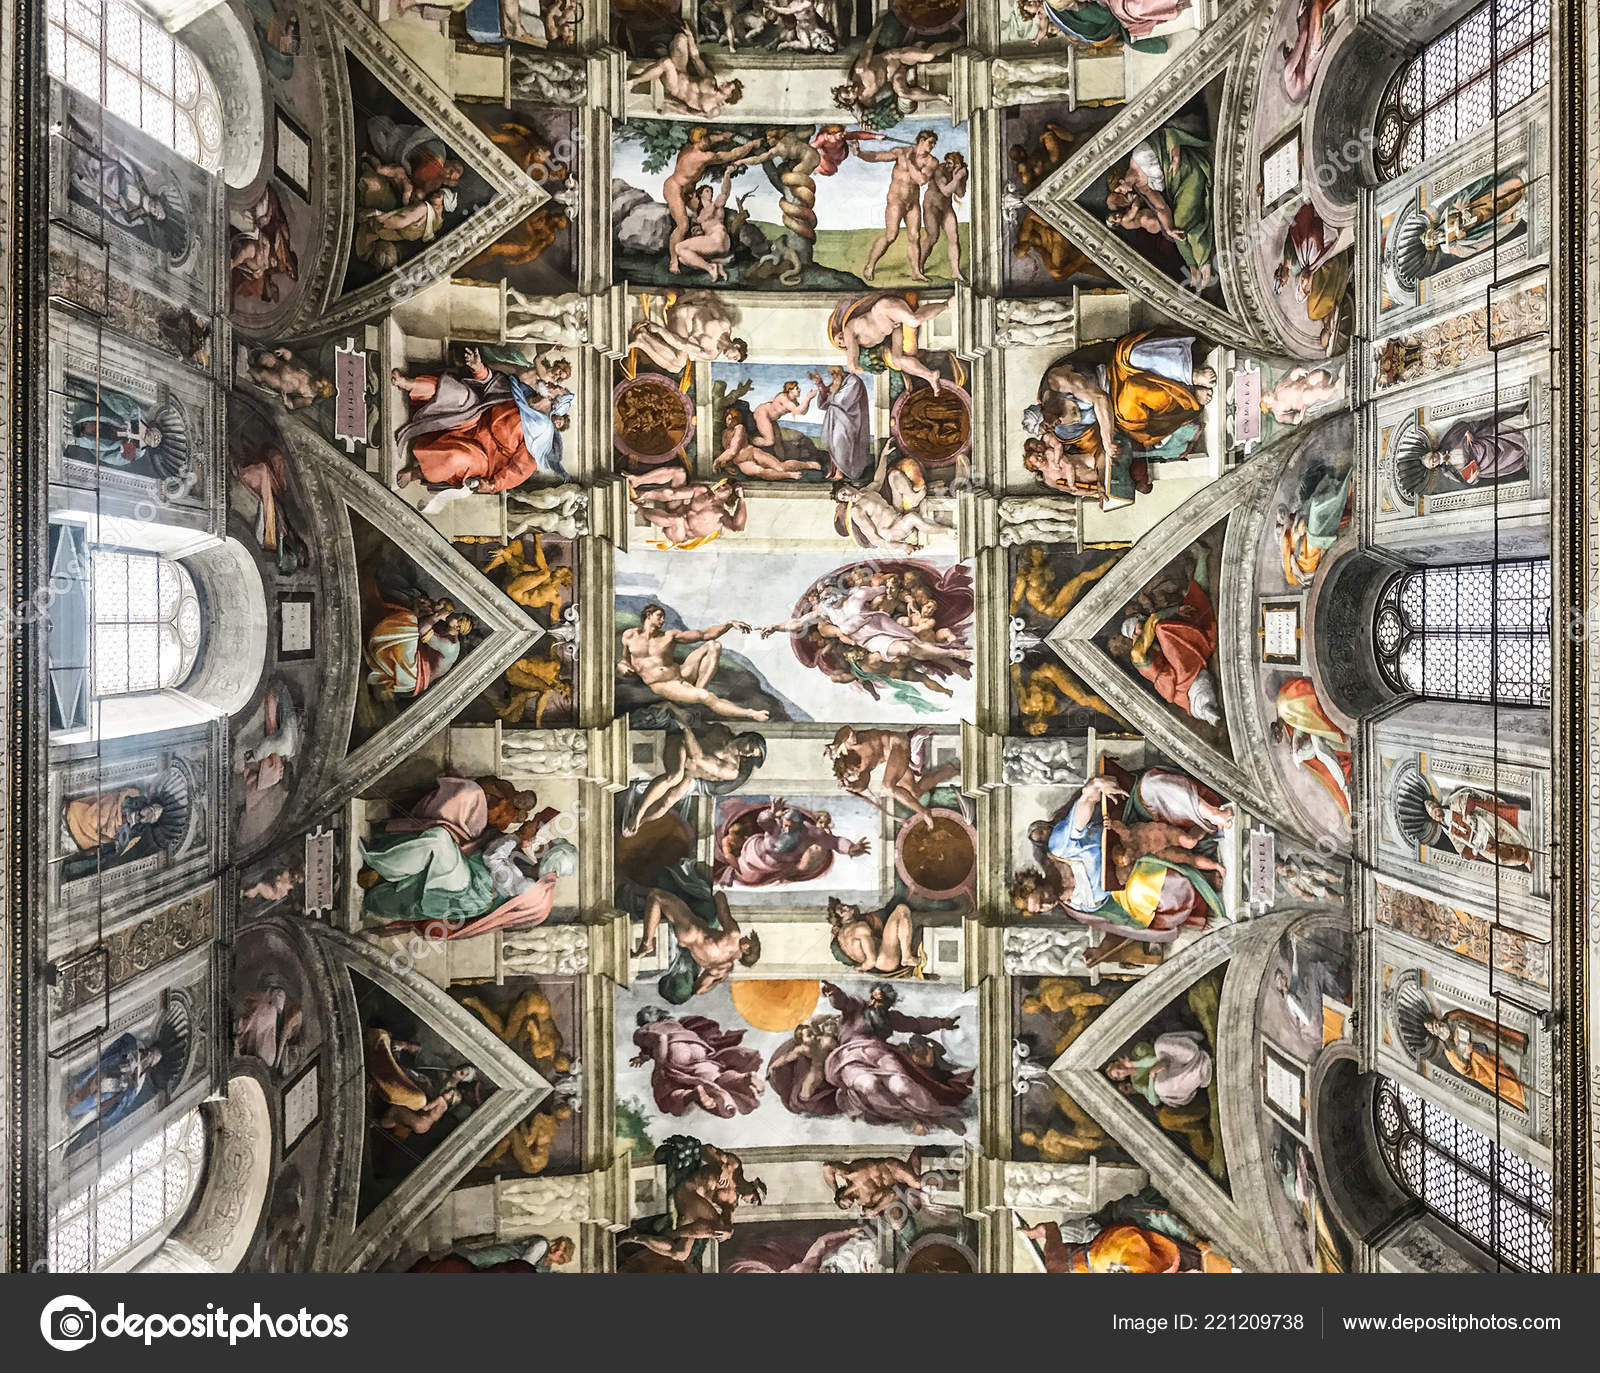 Italy Vatican Sistine Chapel November 2017 Ceiling Sistine